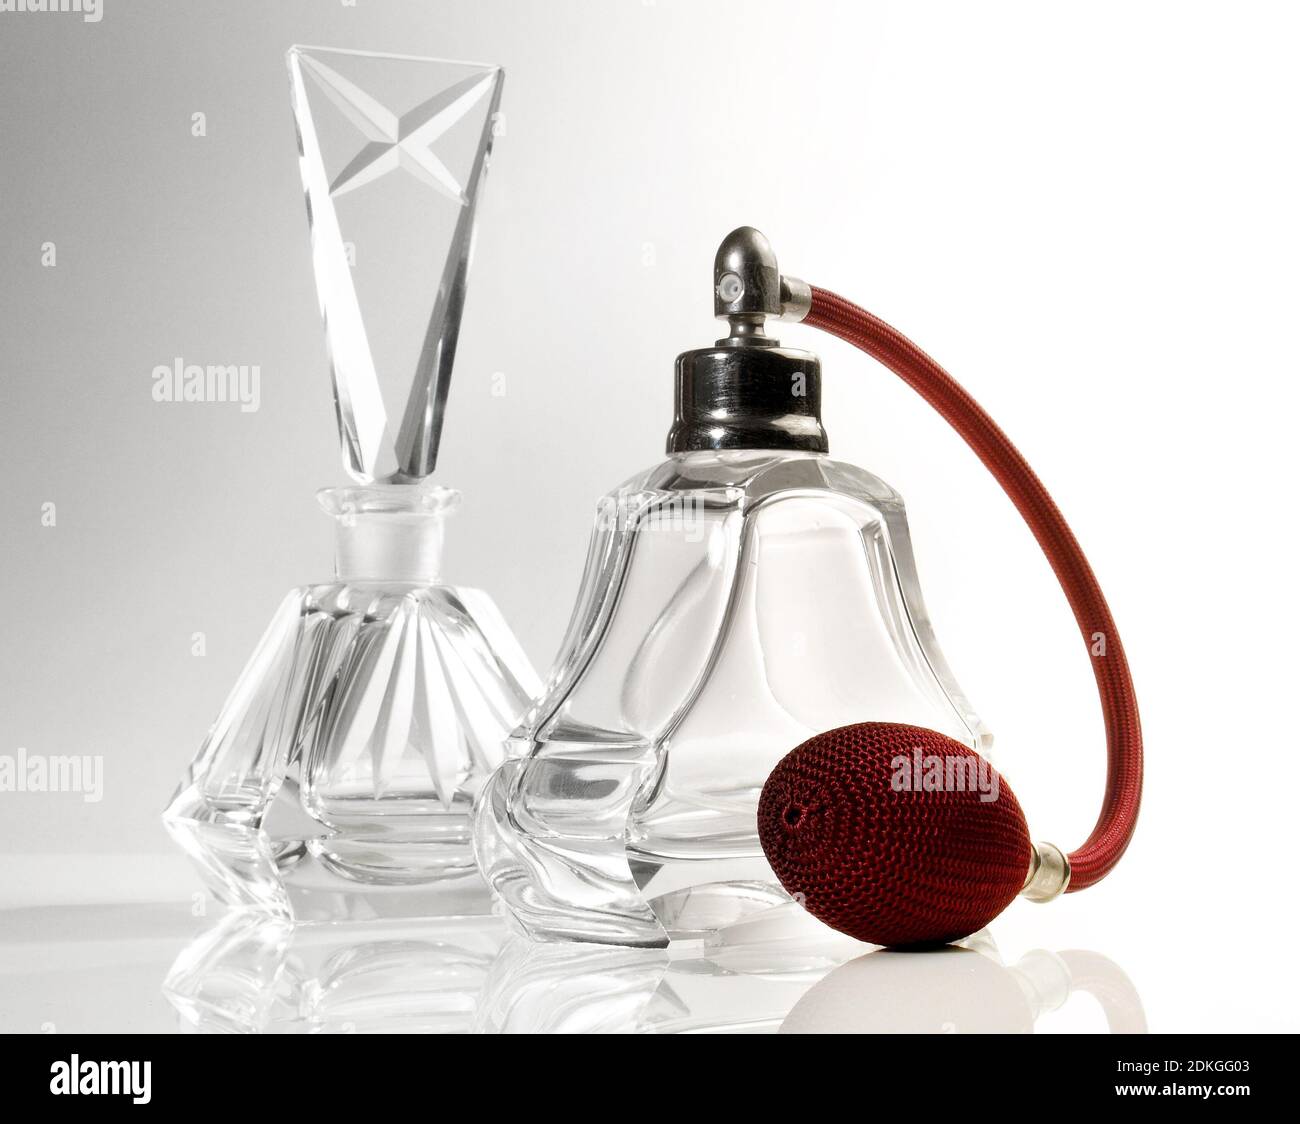 Botella de Perfume Vieja presente aislada sobre fondo blanco Foto de stock